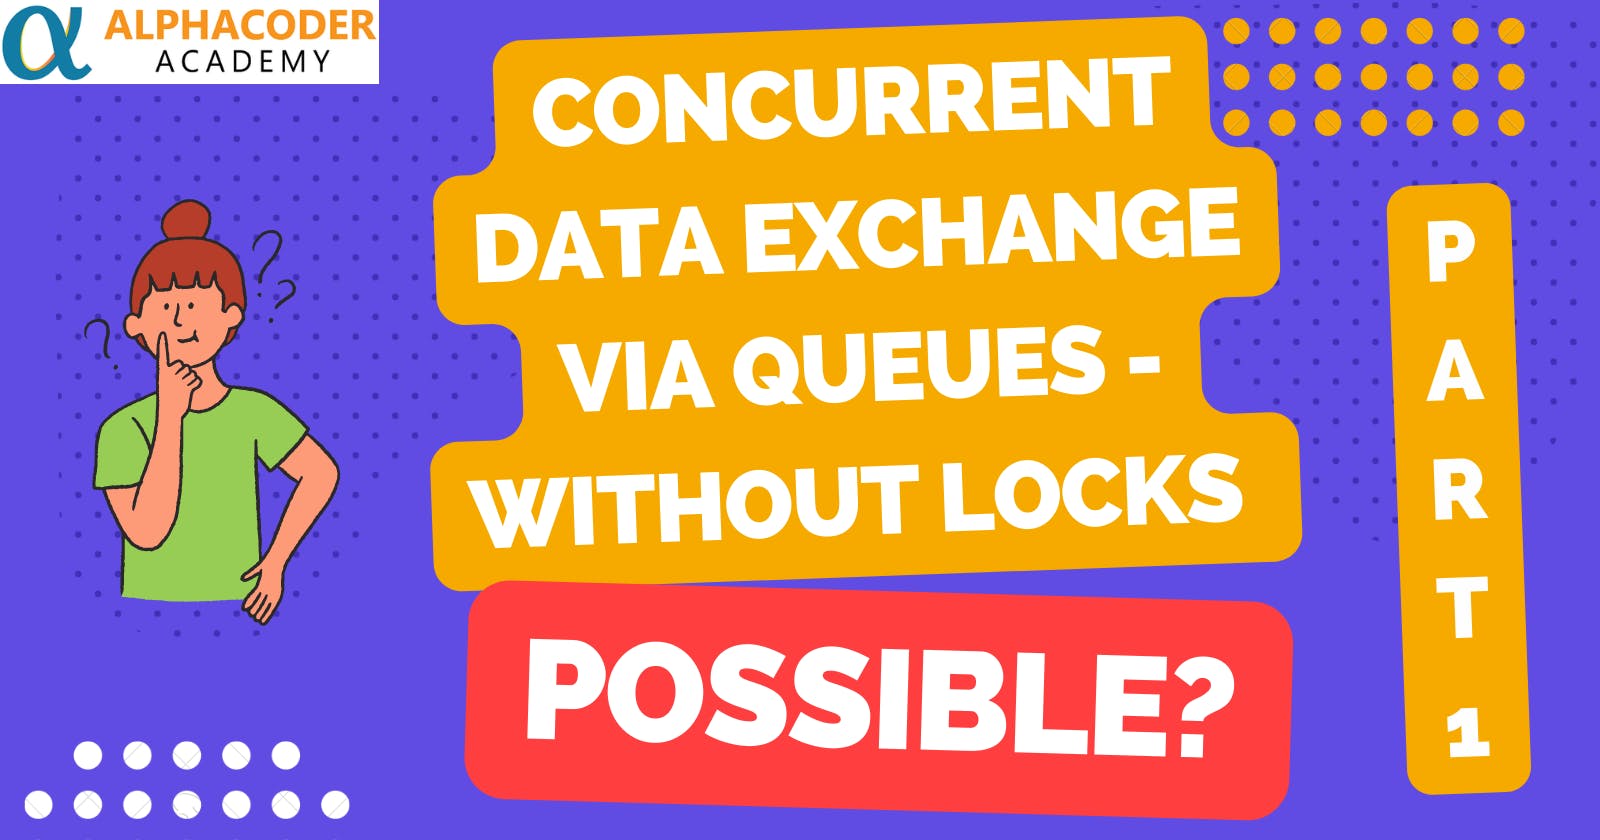 Concurrent data exchange via queues - without locks : Possible?